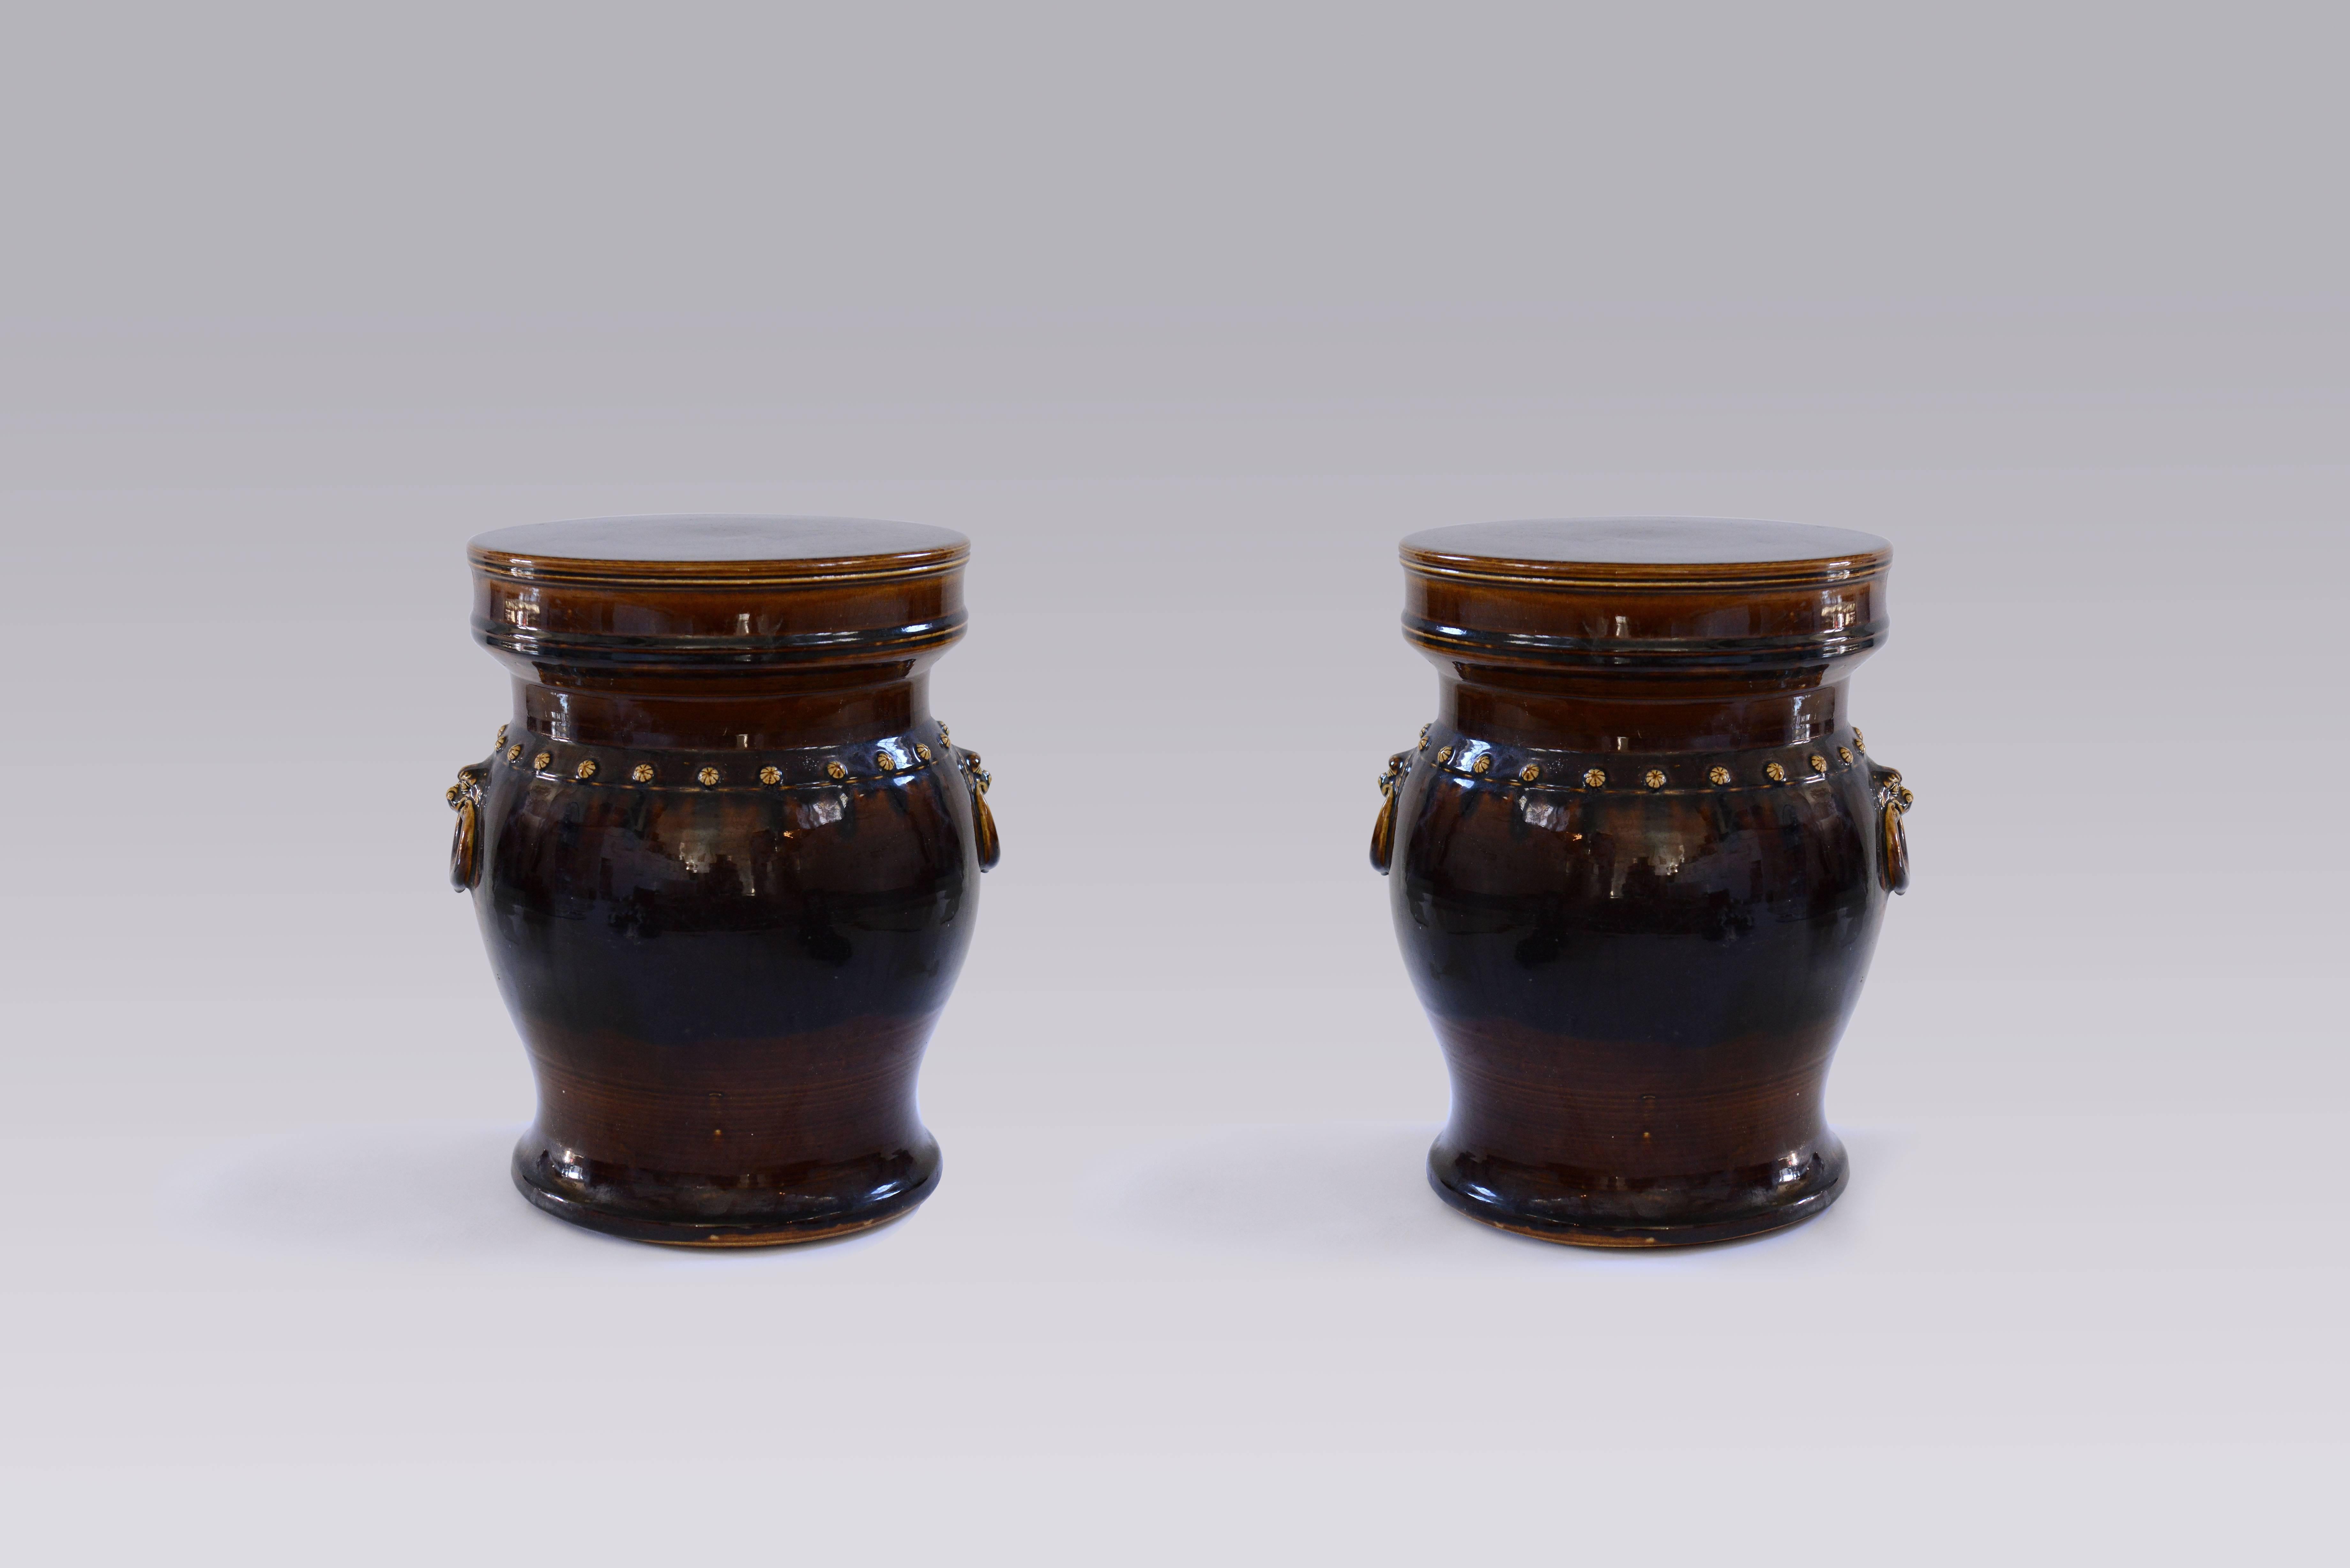 A pair of elegant dark glazed ceramic stools with handles.

